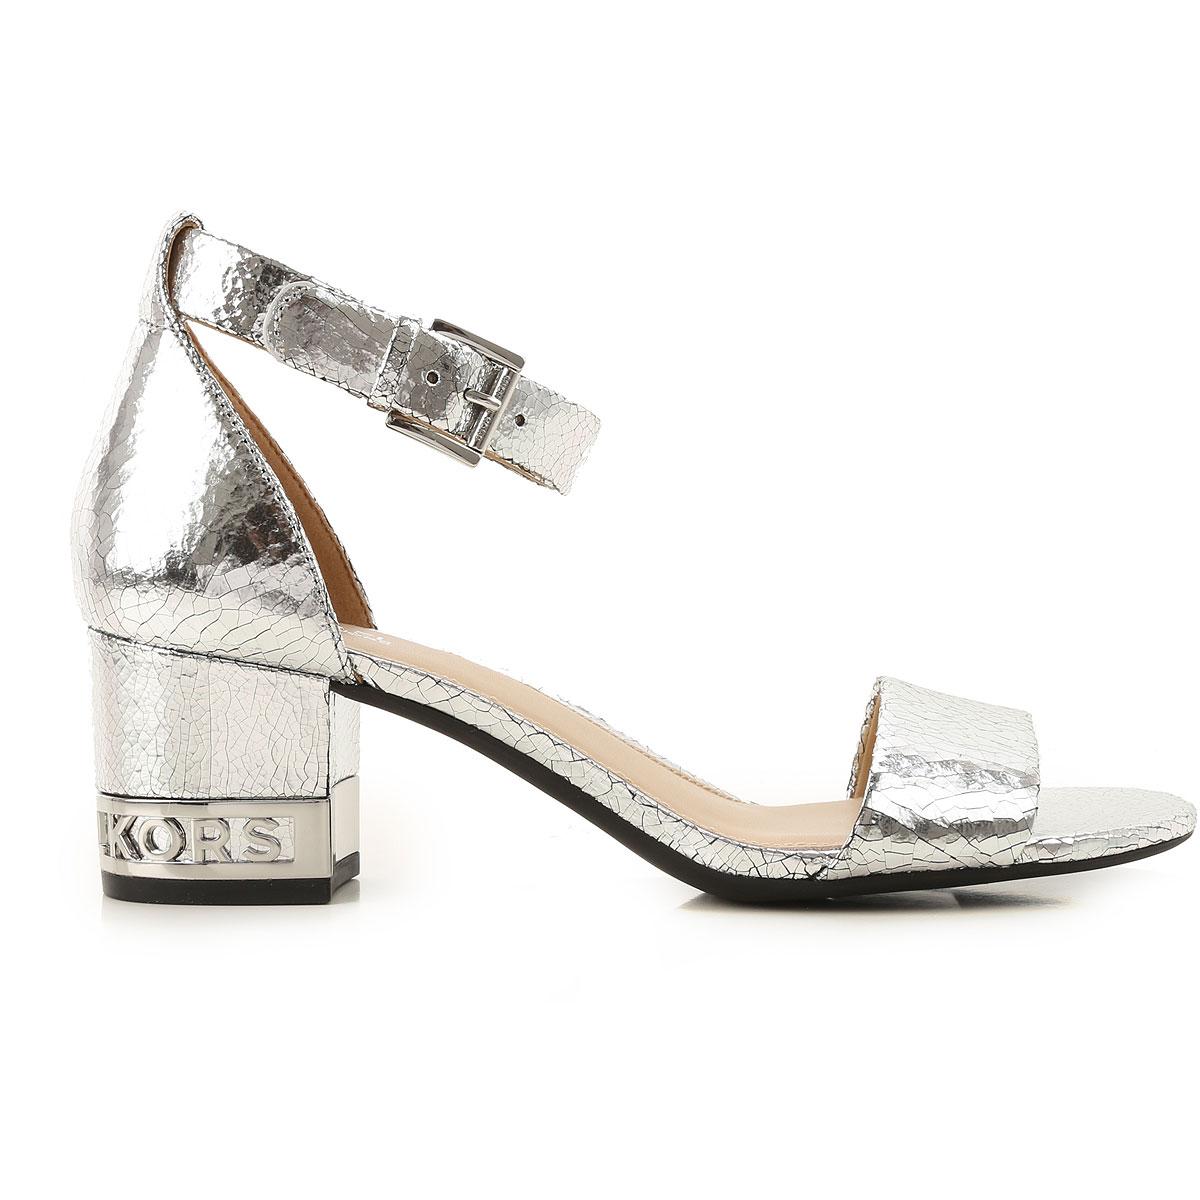 Michael Kors Sandals For Women On Sale in Silver (Metallic) - Lyst